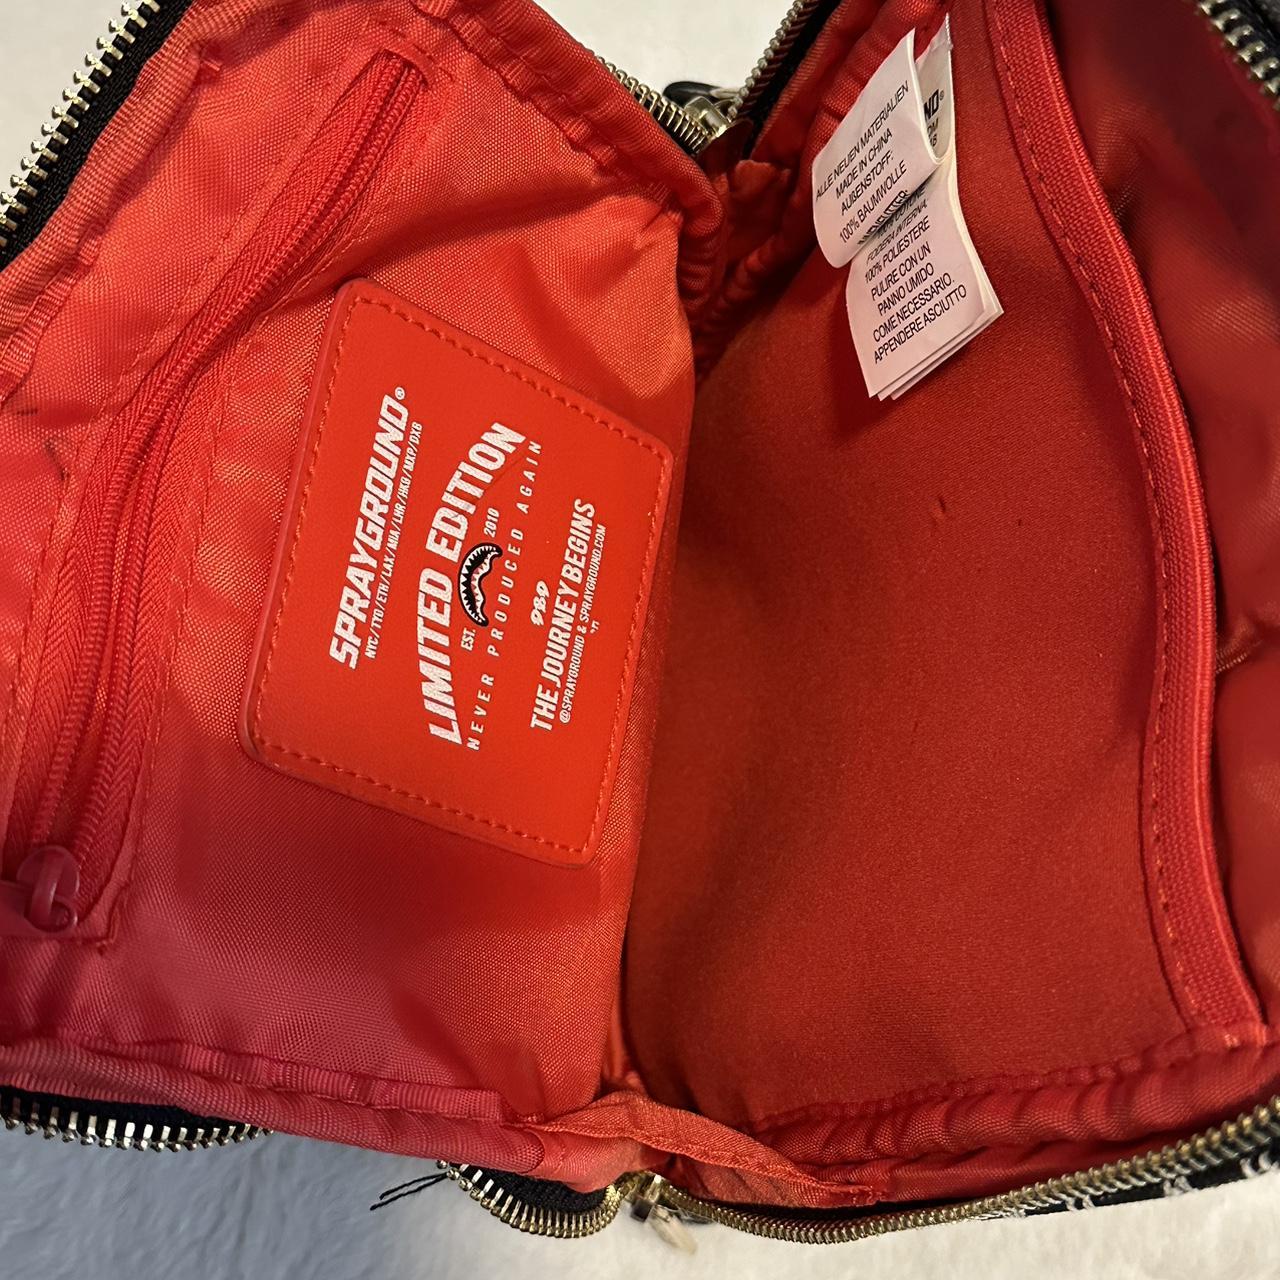 LIMITED EDITION SprayGround duffle bag made in 2019. - Depop